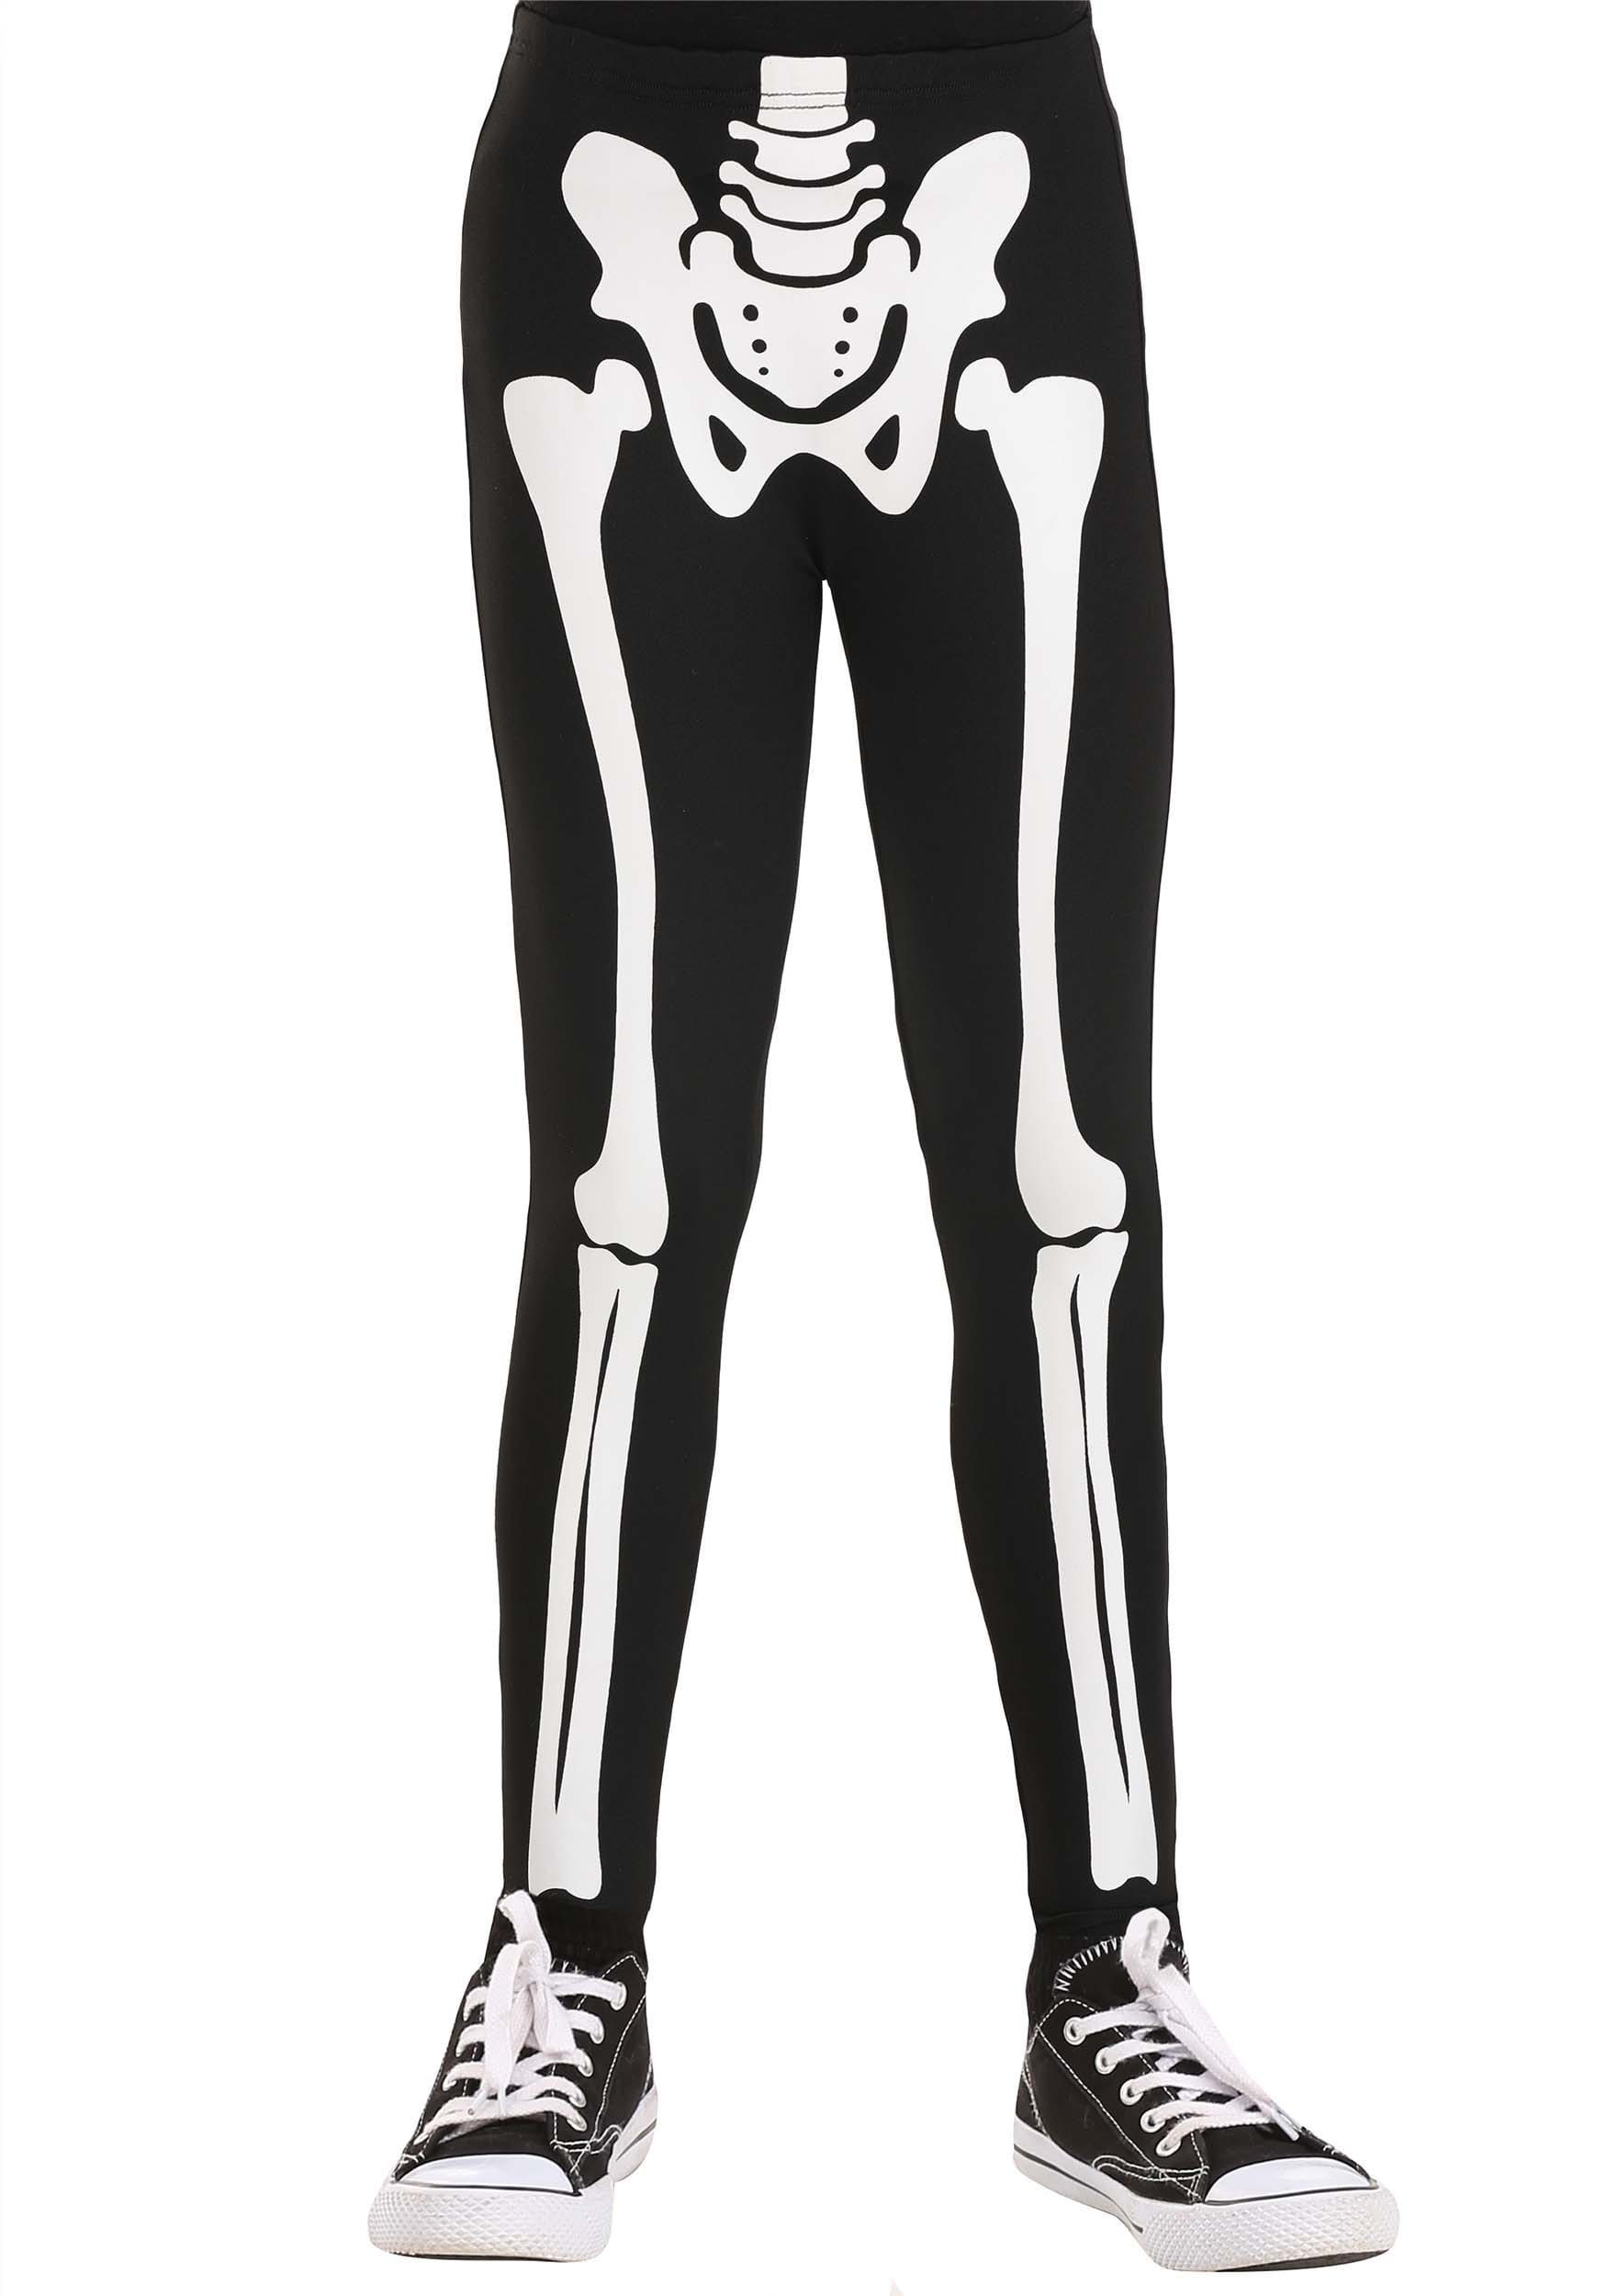  Fun Costumes Kid's Skeleton Leggings Small Black